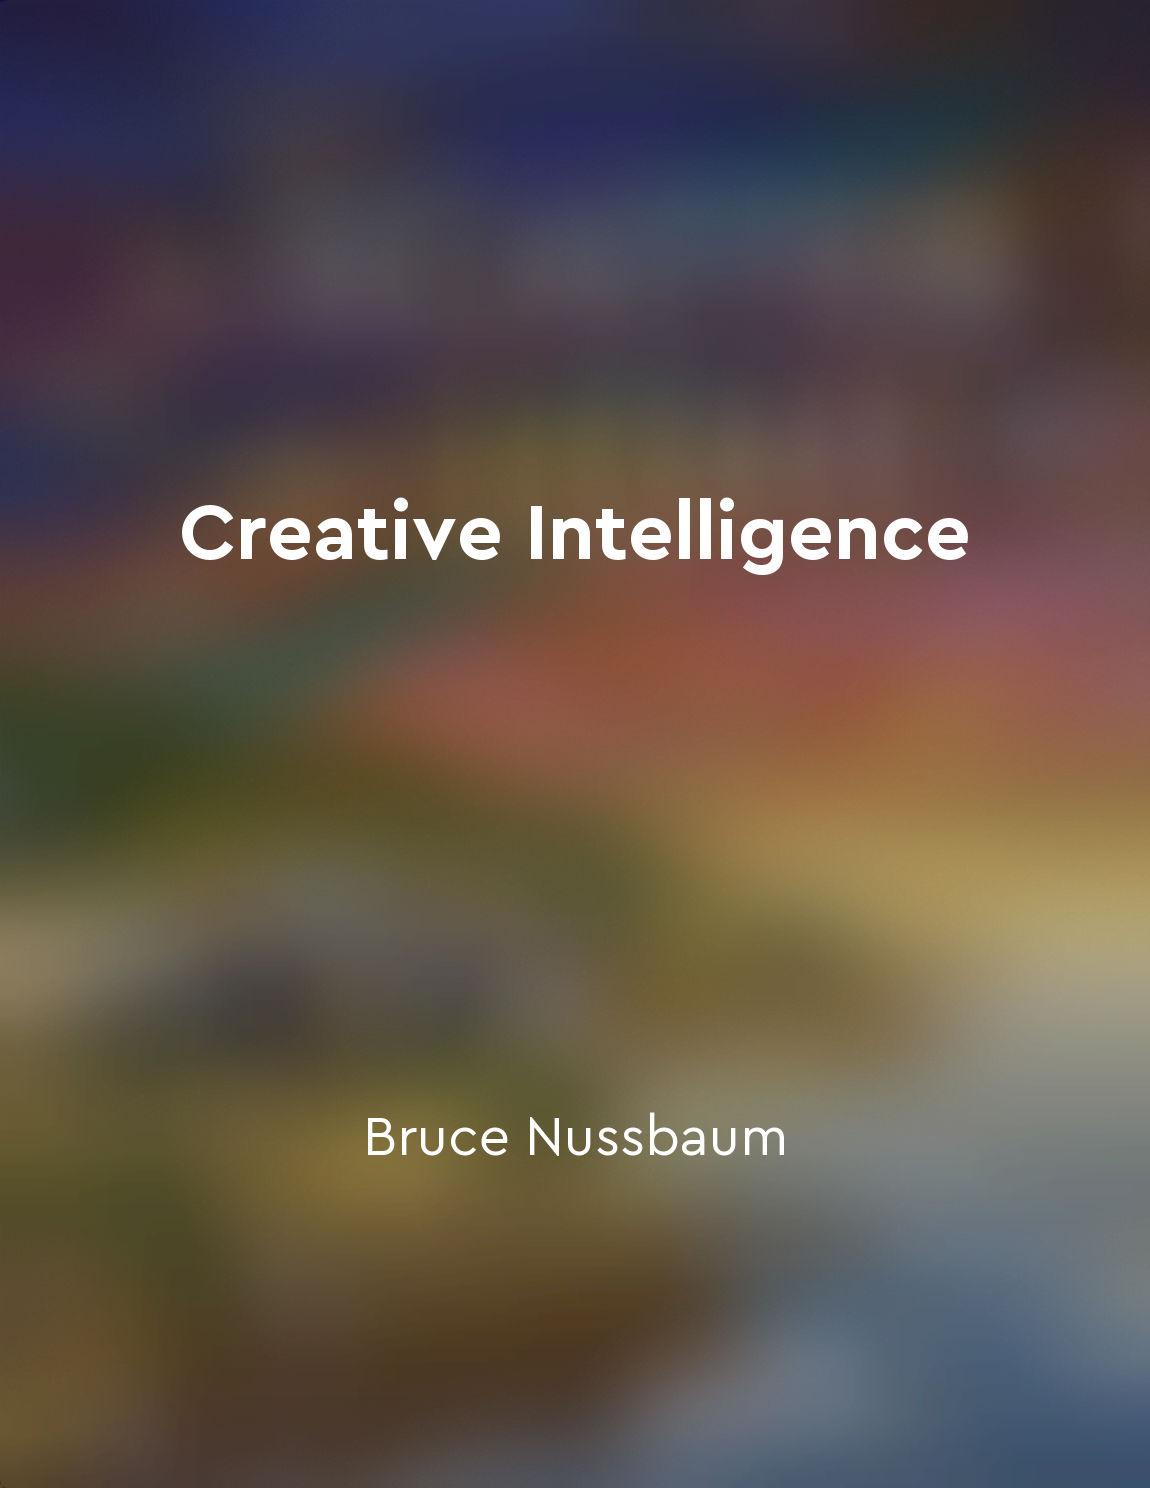 Creative intelligence involves pushing boundaries and taking risks